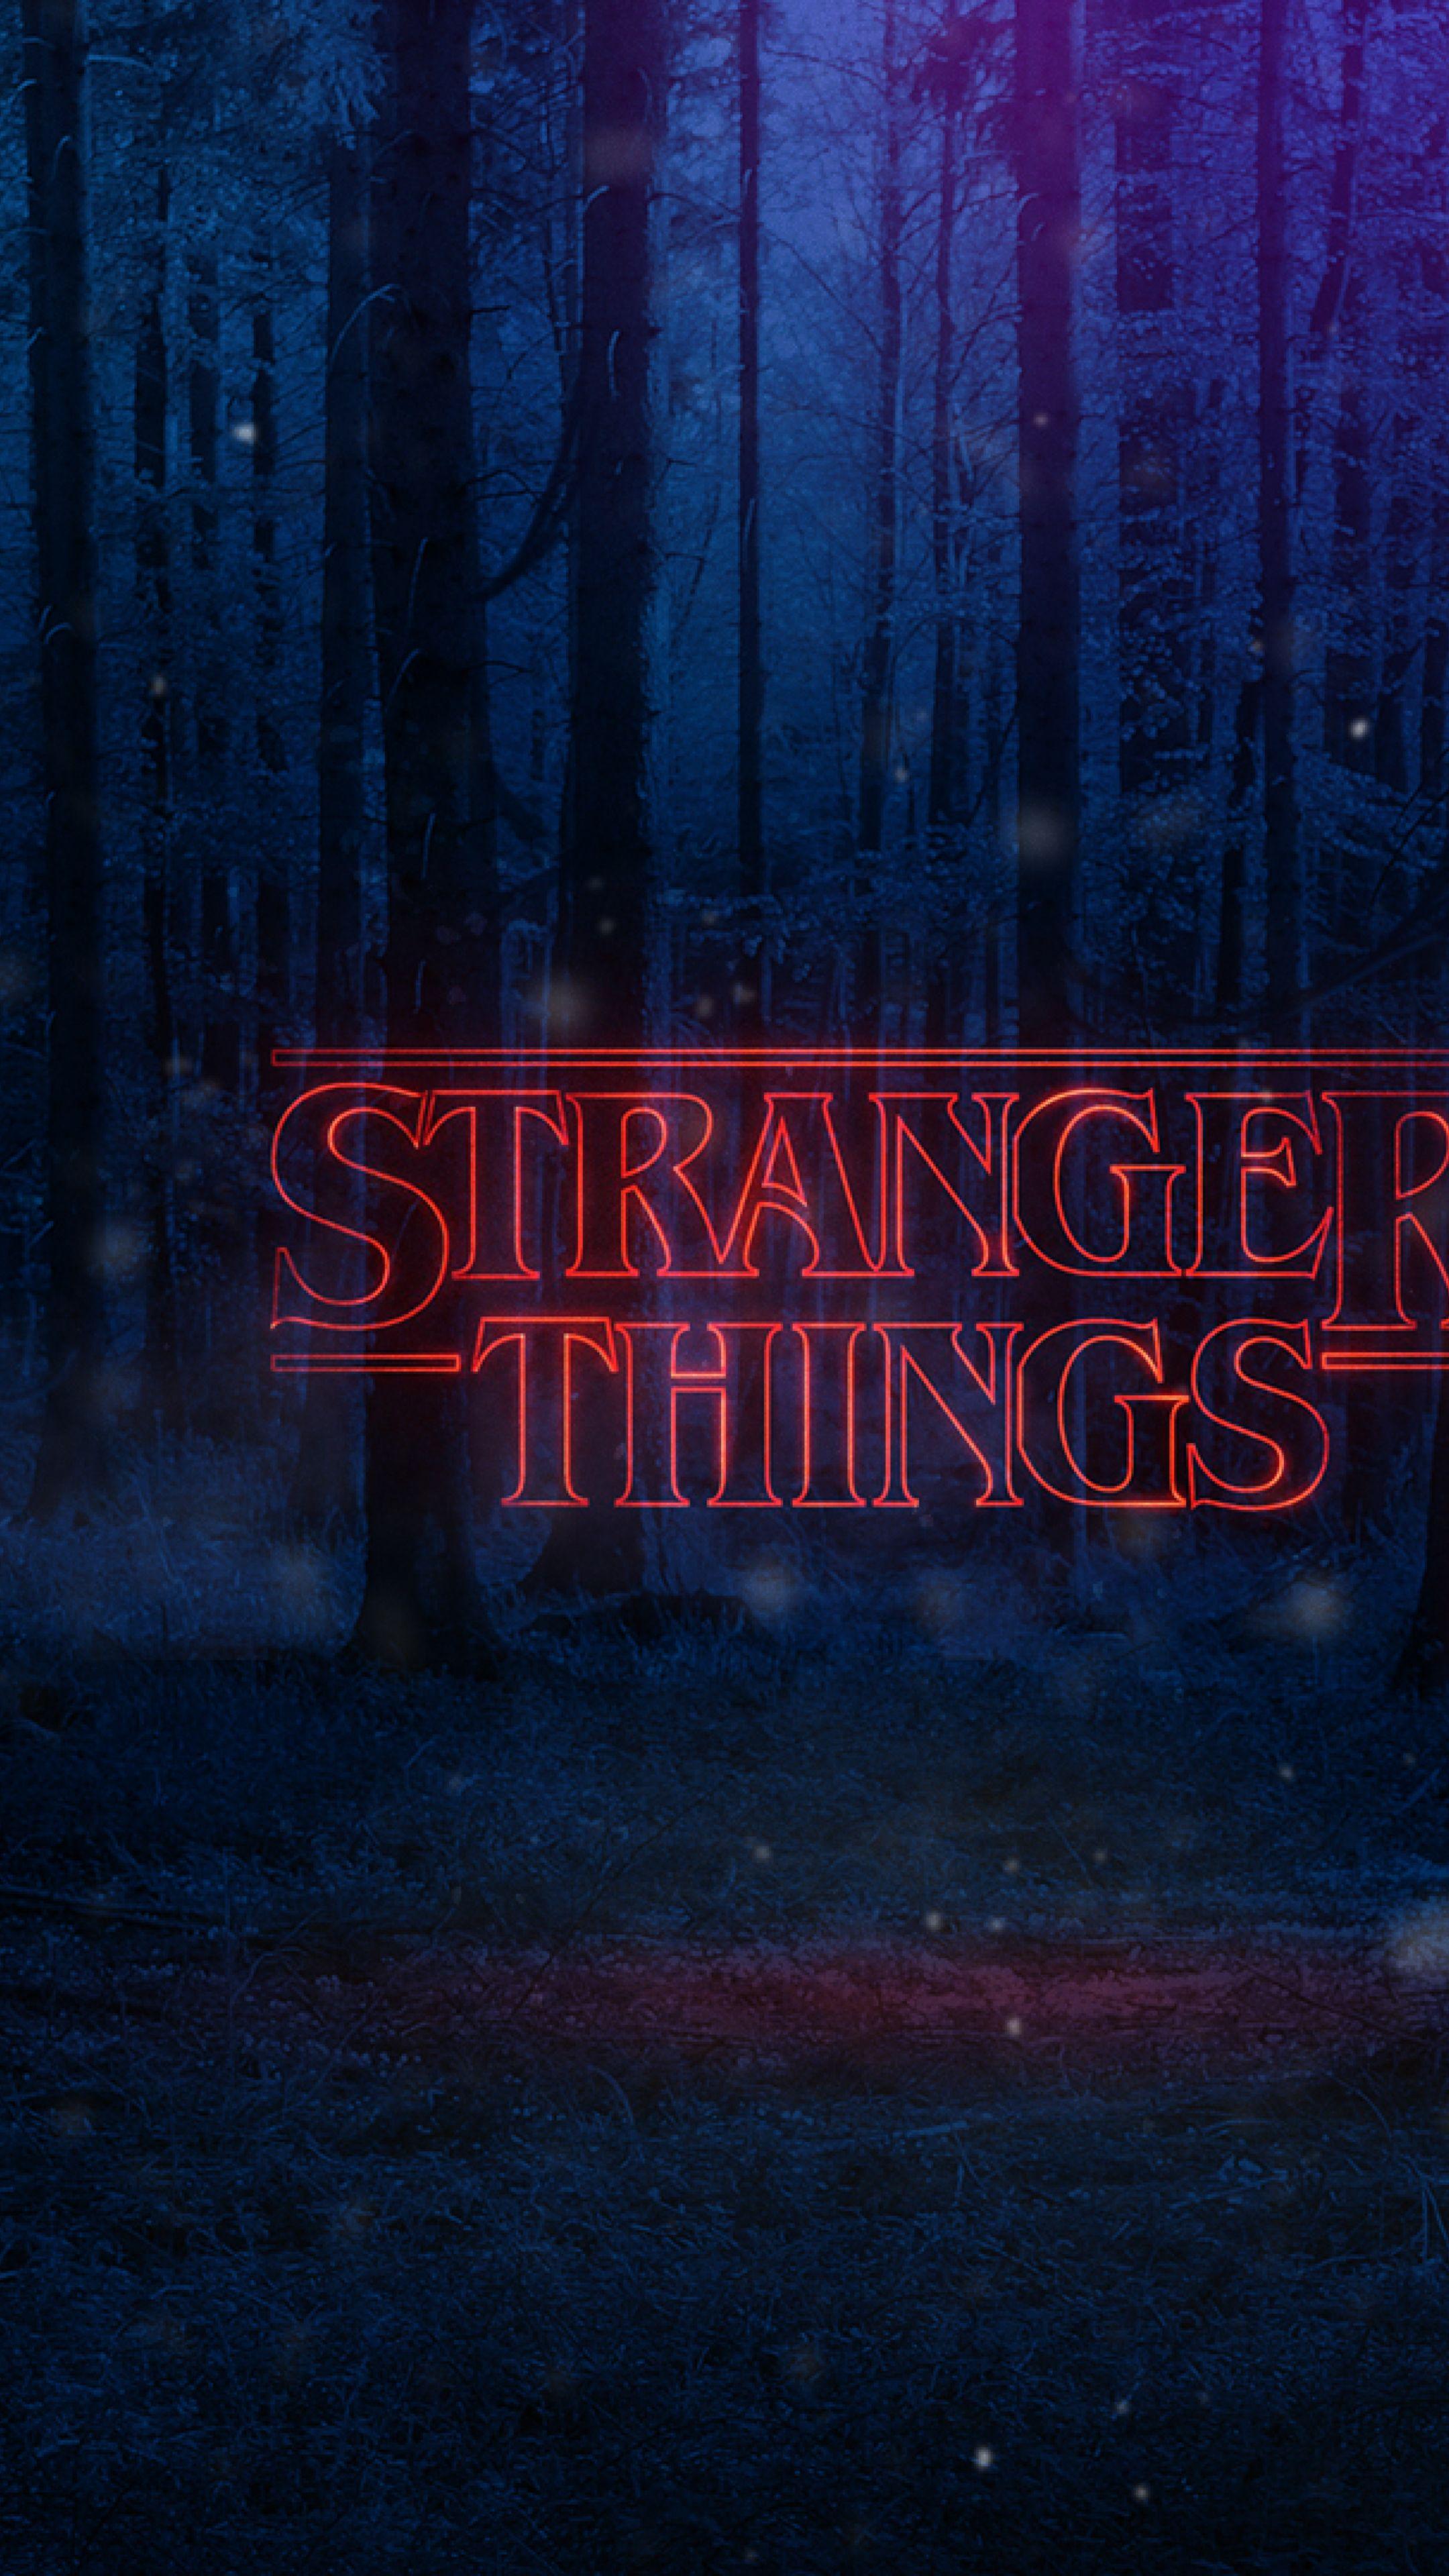 Stranger Things Poster Wallpapers - Top Free Stranger Things Poster